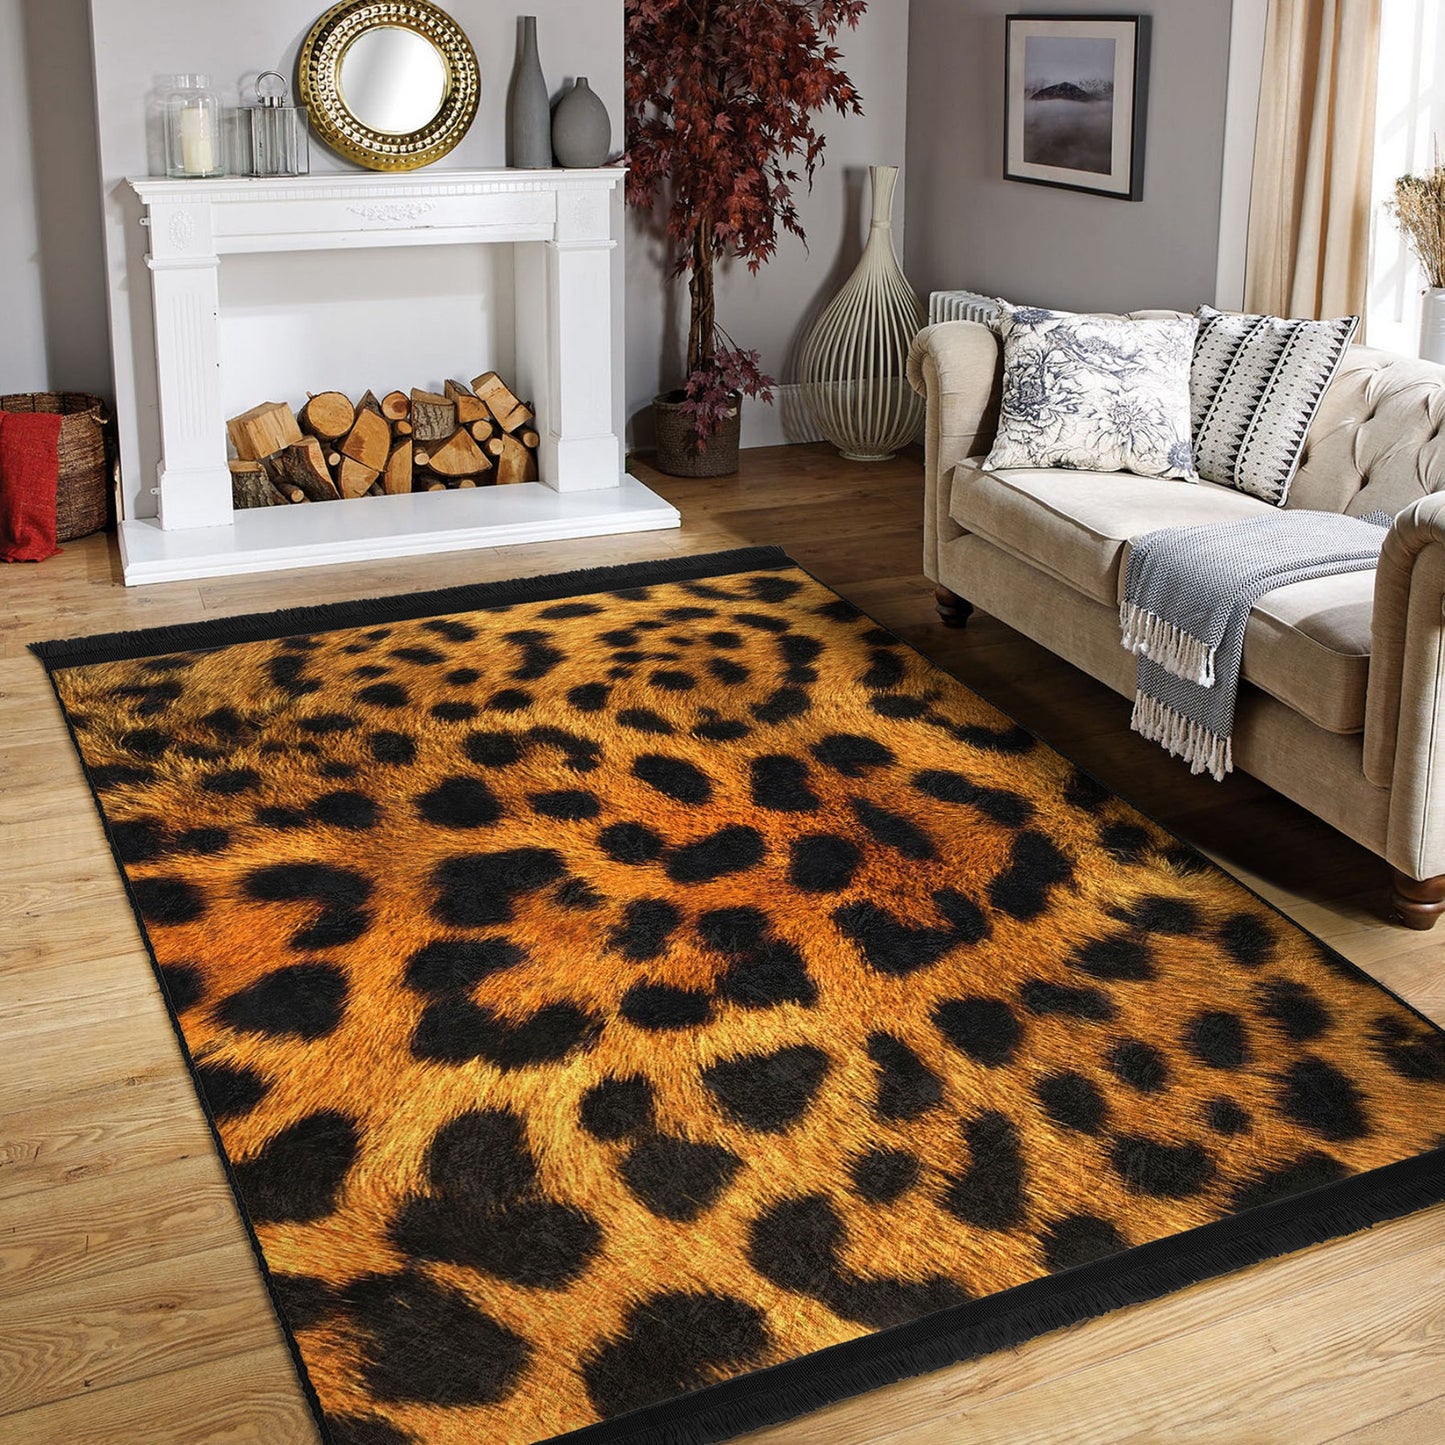 Decorative Area Rug with an Untamed Leopard Design